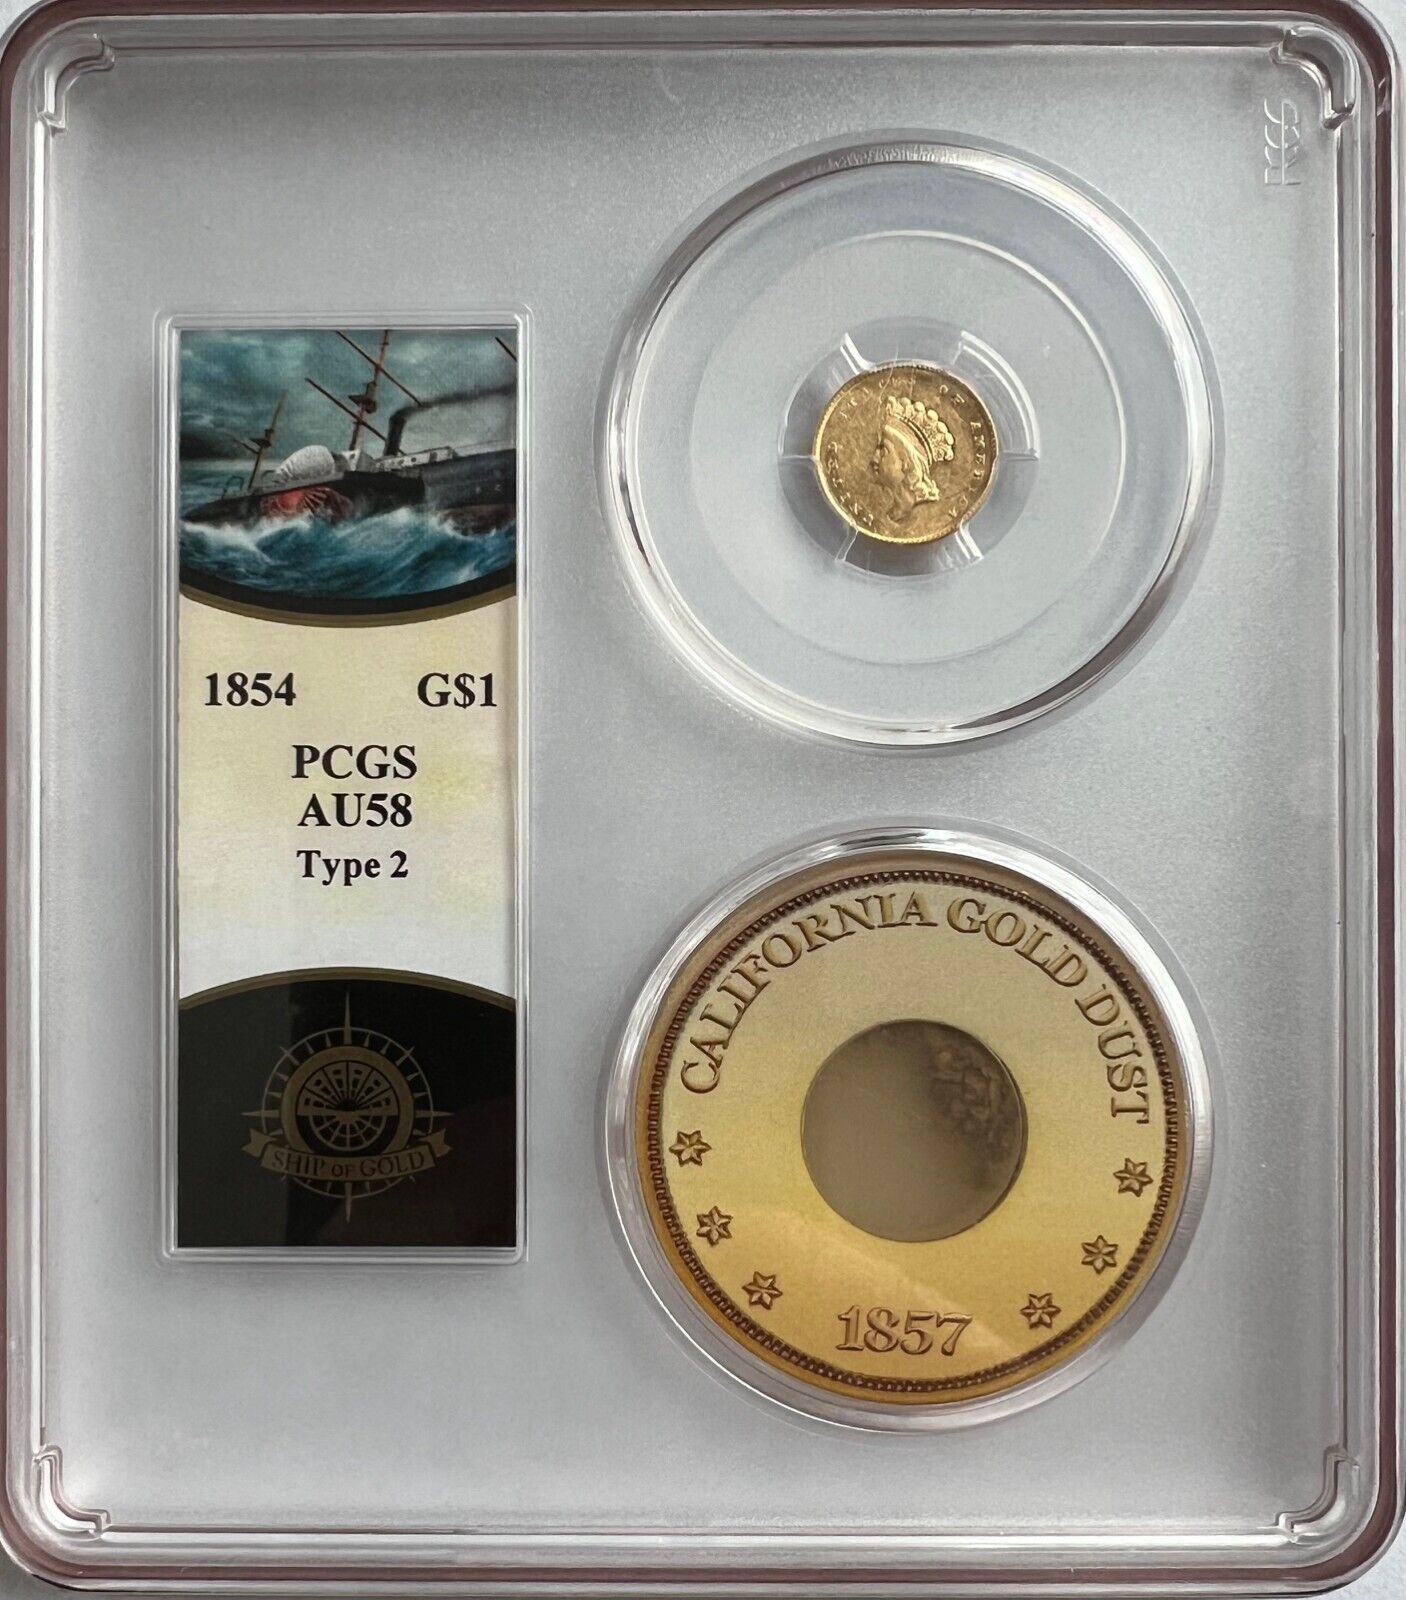 SS CENTRAL AMERICA 1854 TYPE 2 $1.00 GOLD  DOLLAR AU58 W/PINCH SHIPWRECK GOLD